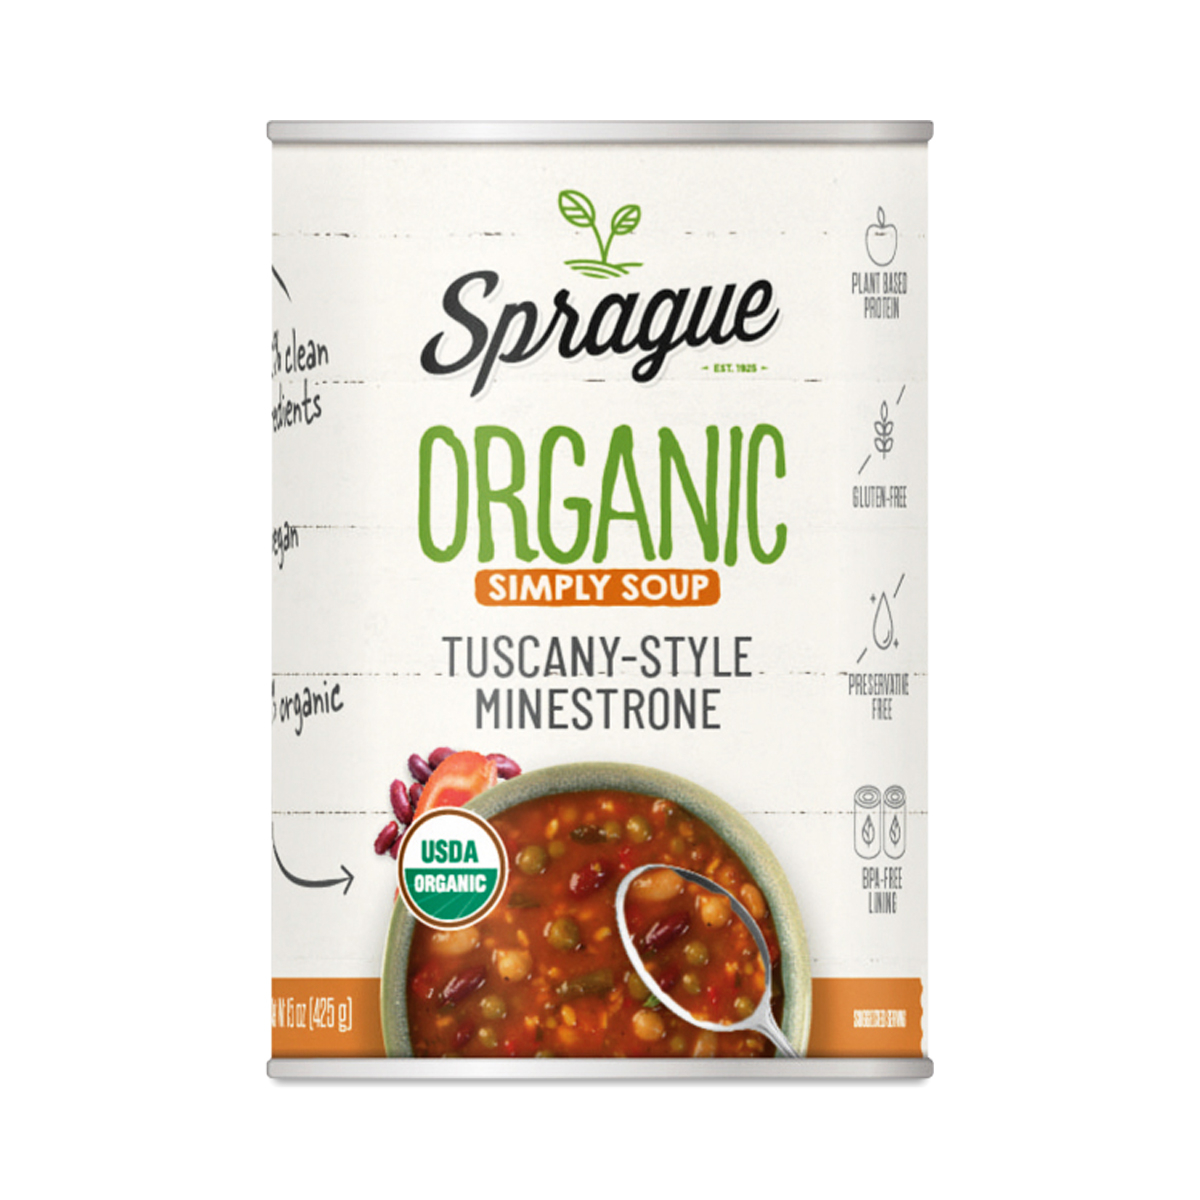 Sprague Organic Tuscany-Style Minestrone Soup 15 oz can